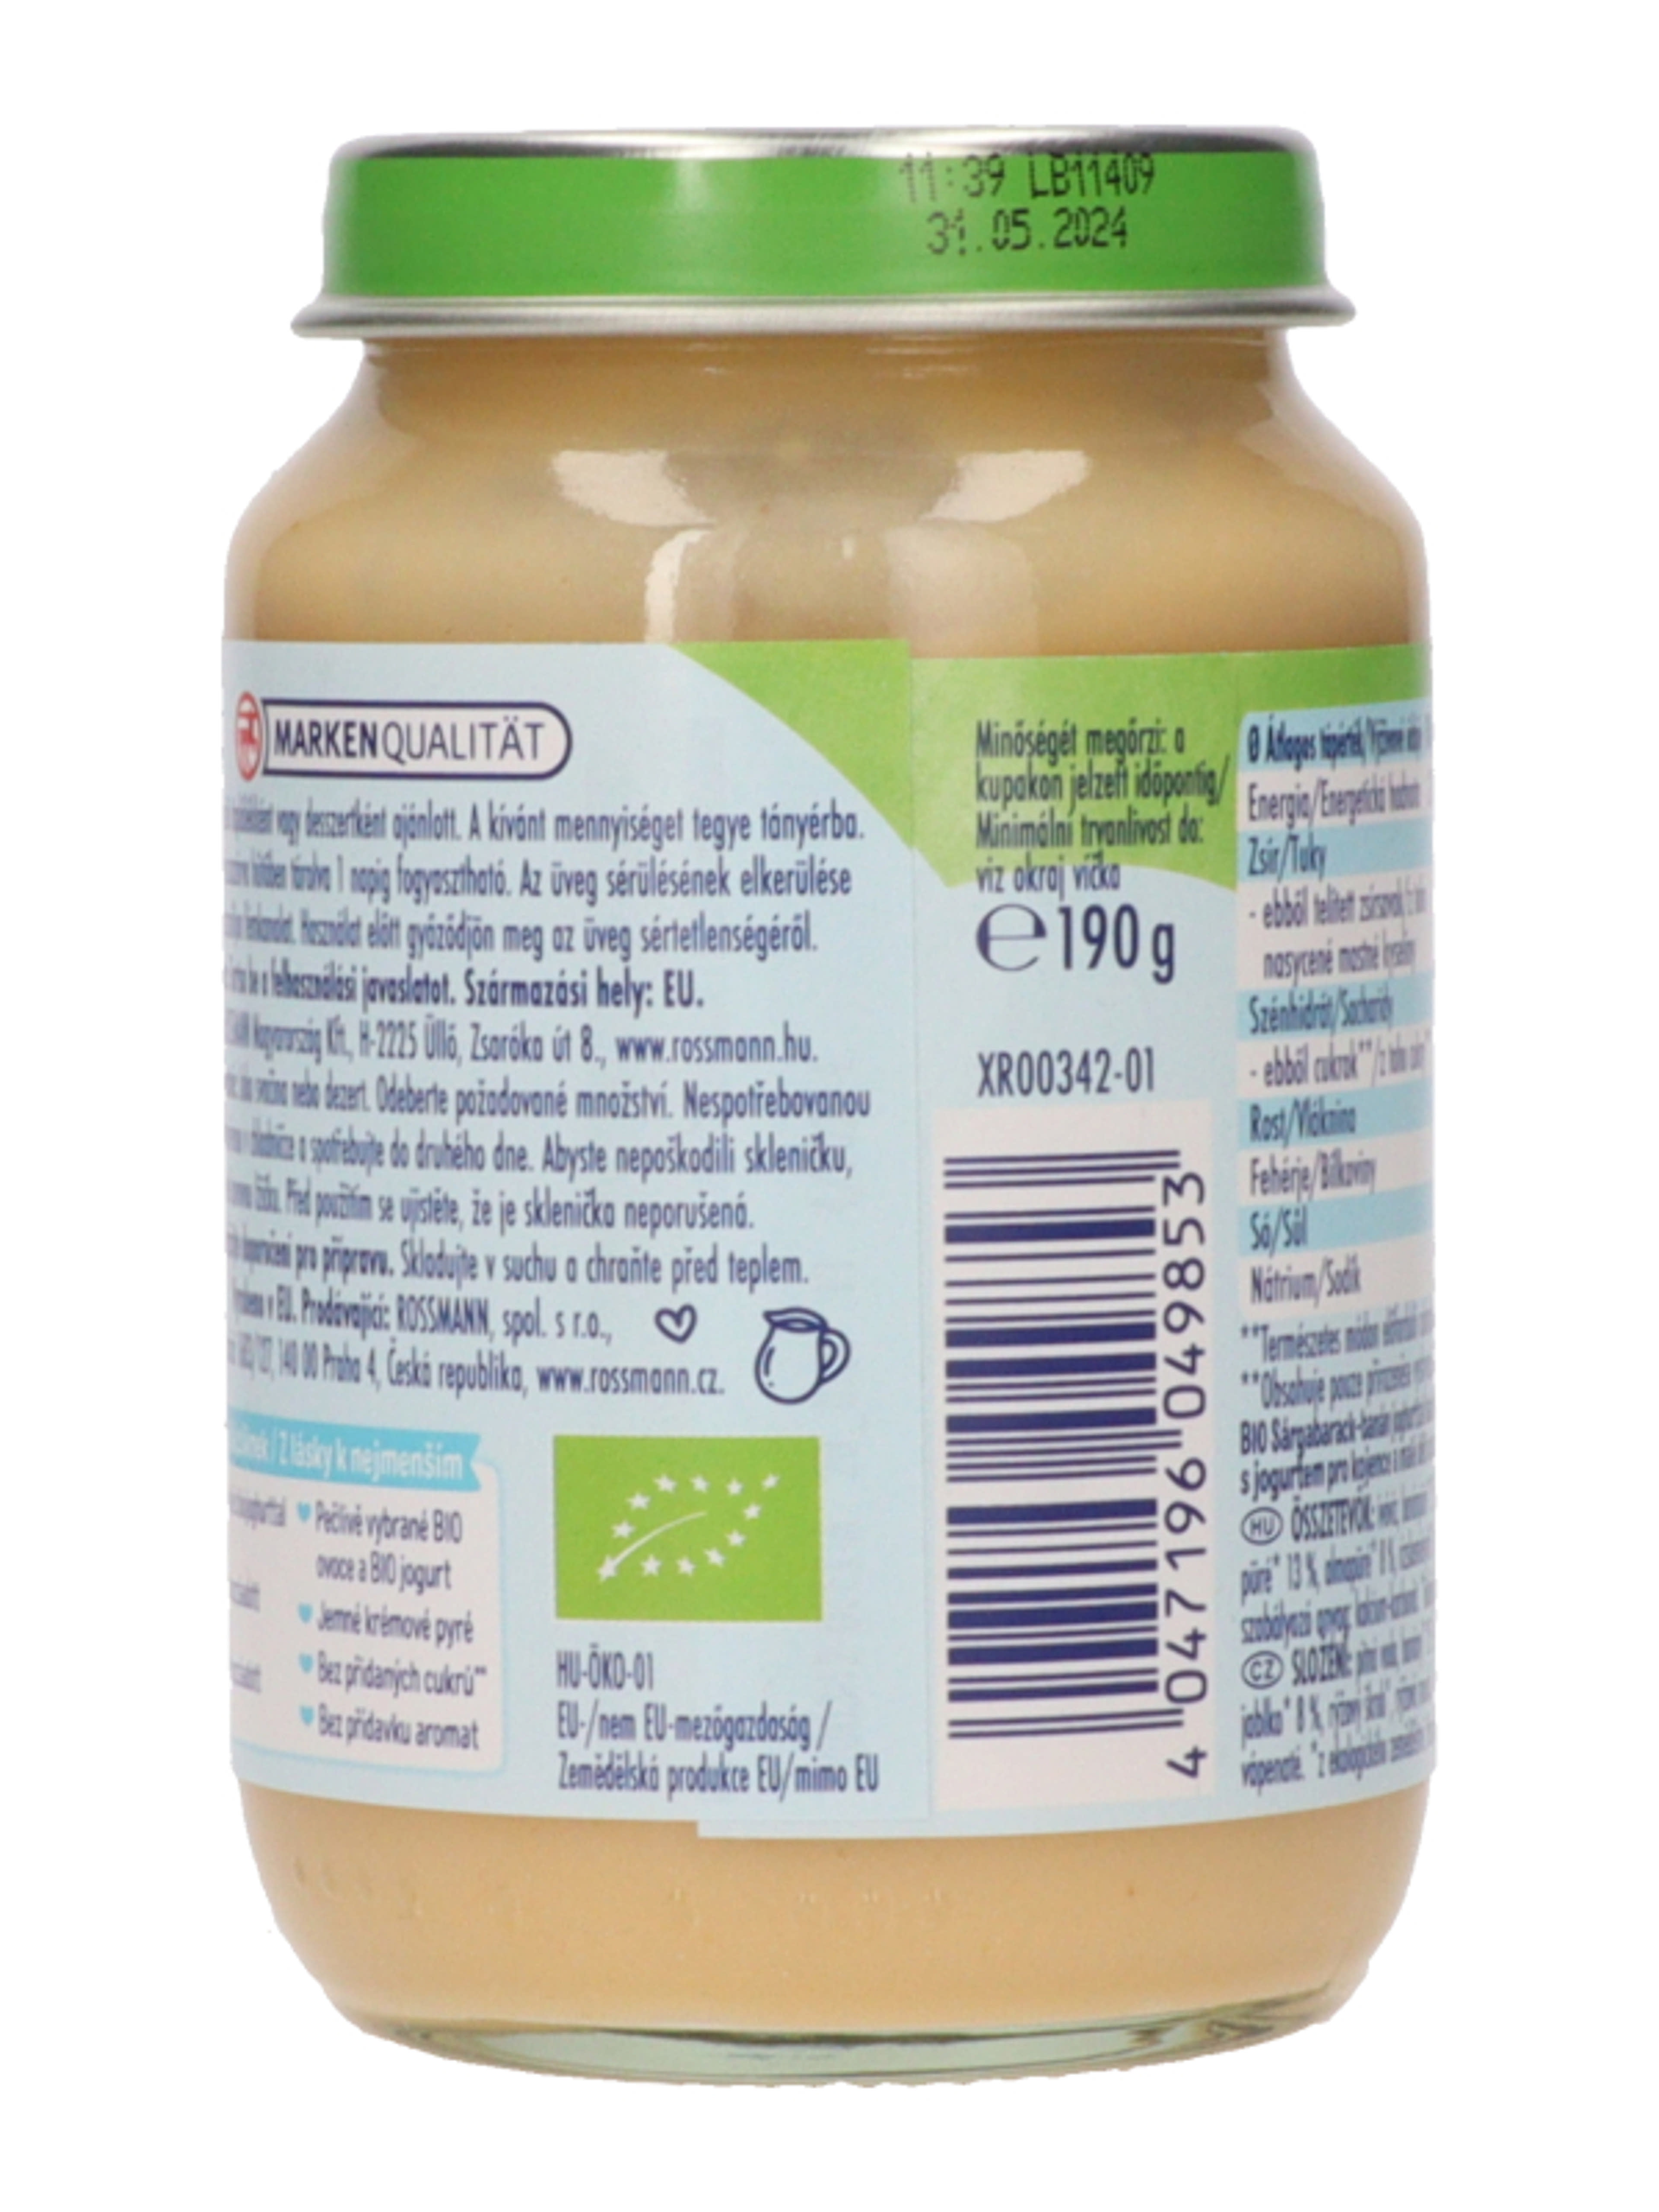 Babydream Bio bébiétel sárgabarack almában, joghurttal 9/10 hónapos kortól - 190 g-5